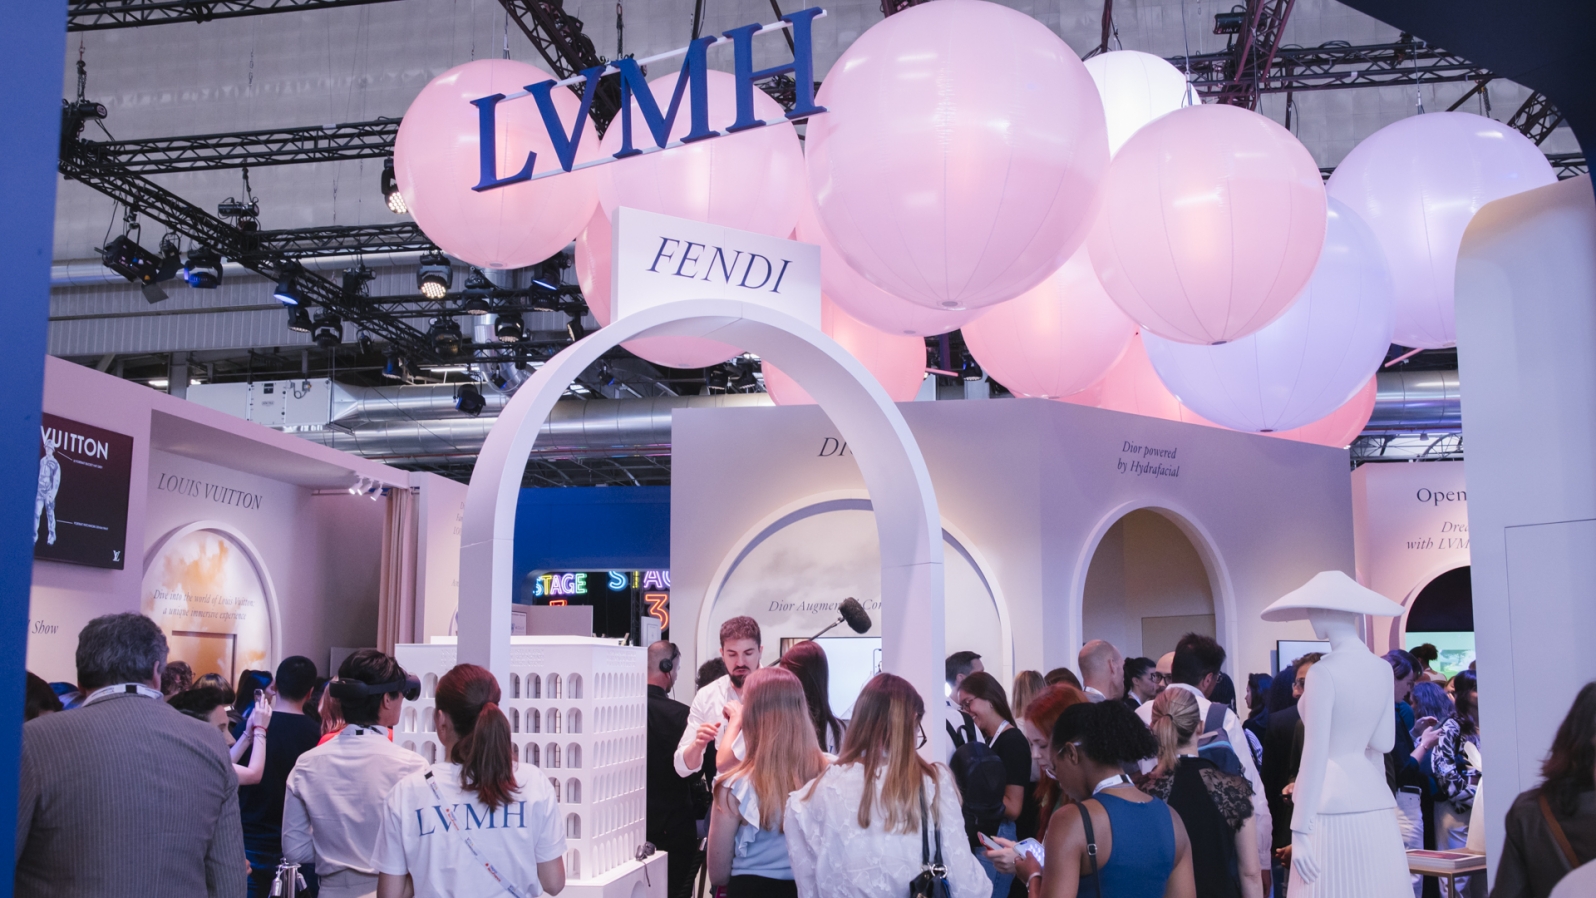 Louis Vuitton Balloon Display Box